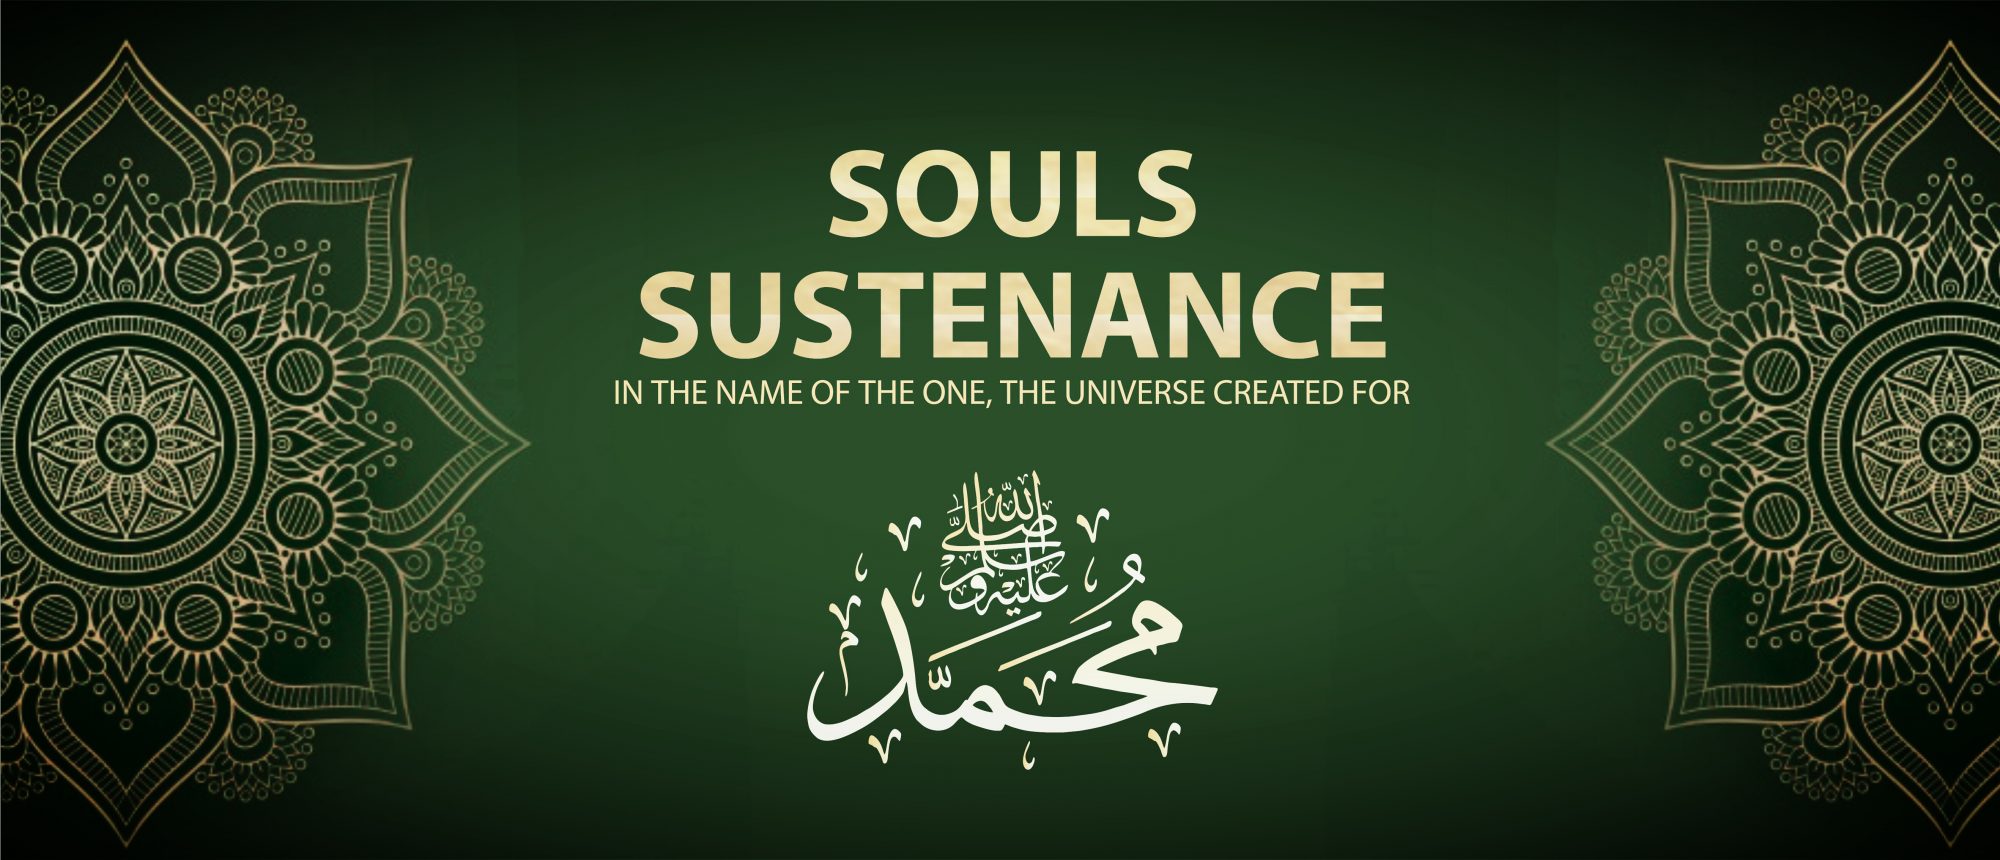 Souls Sustenance